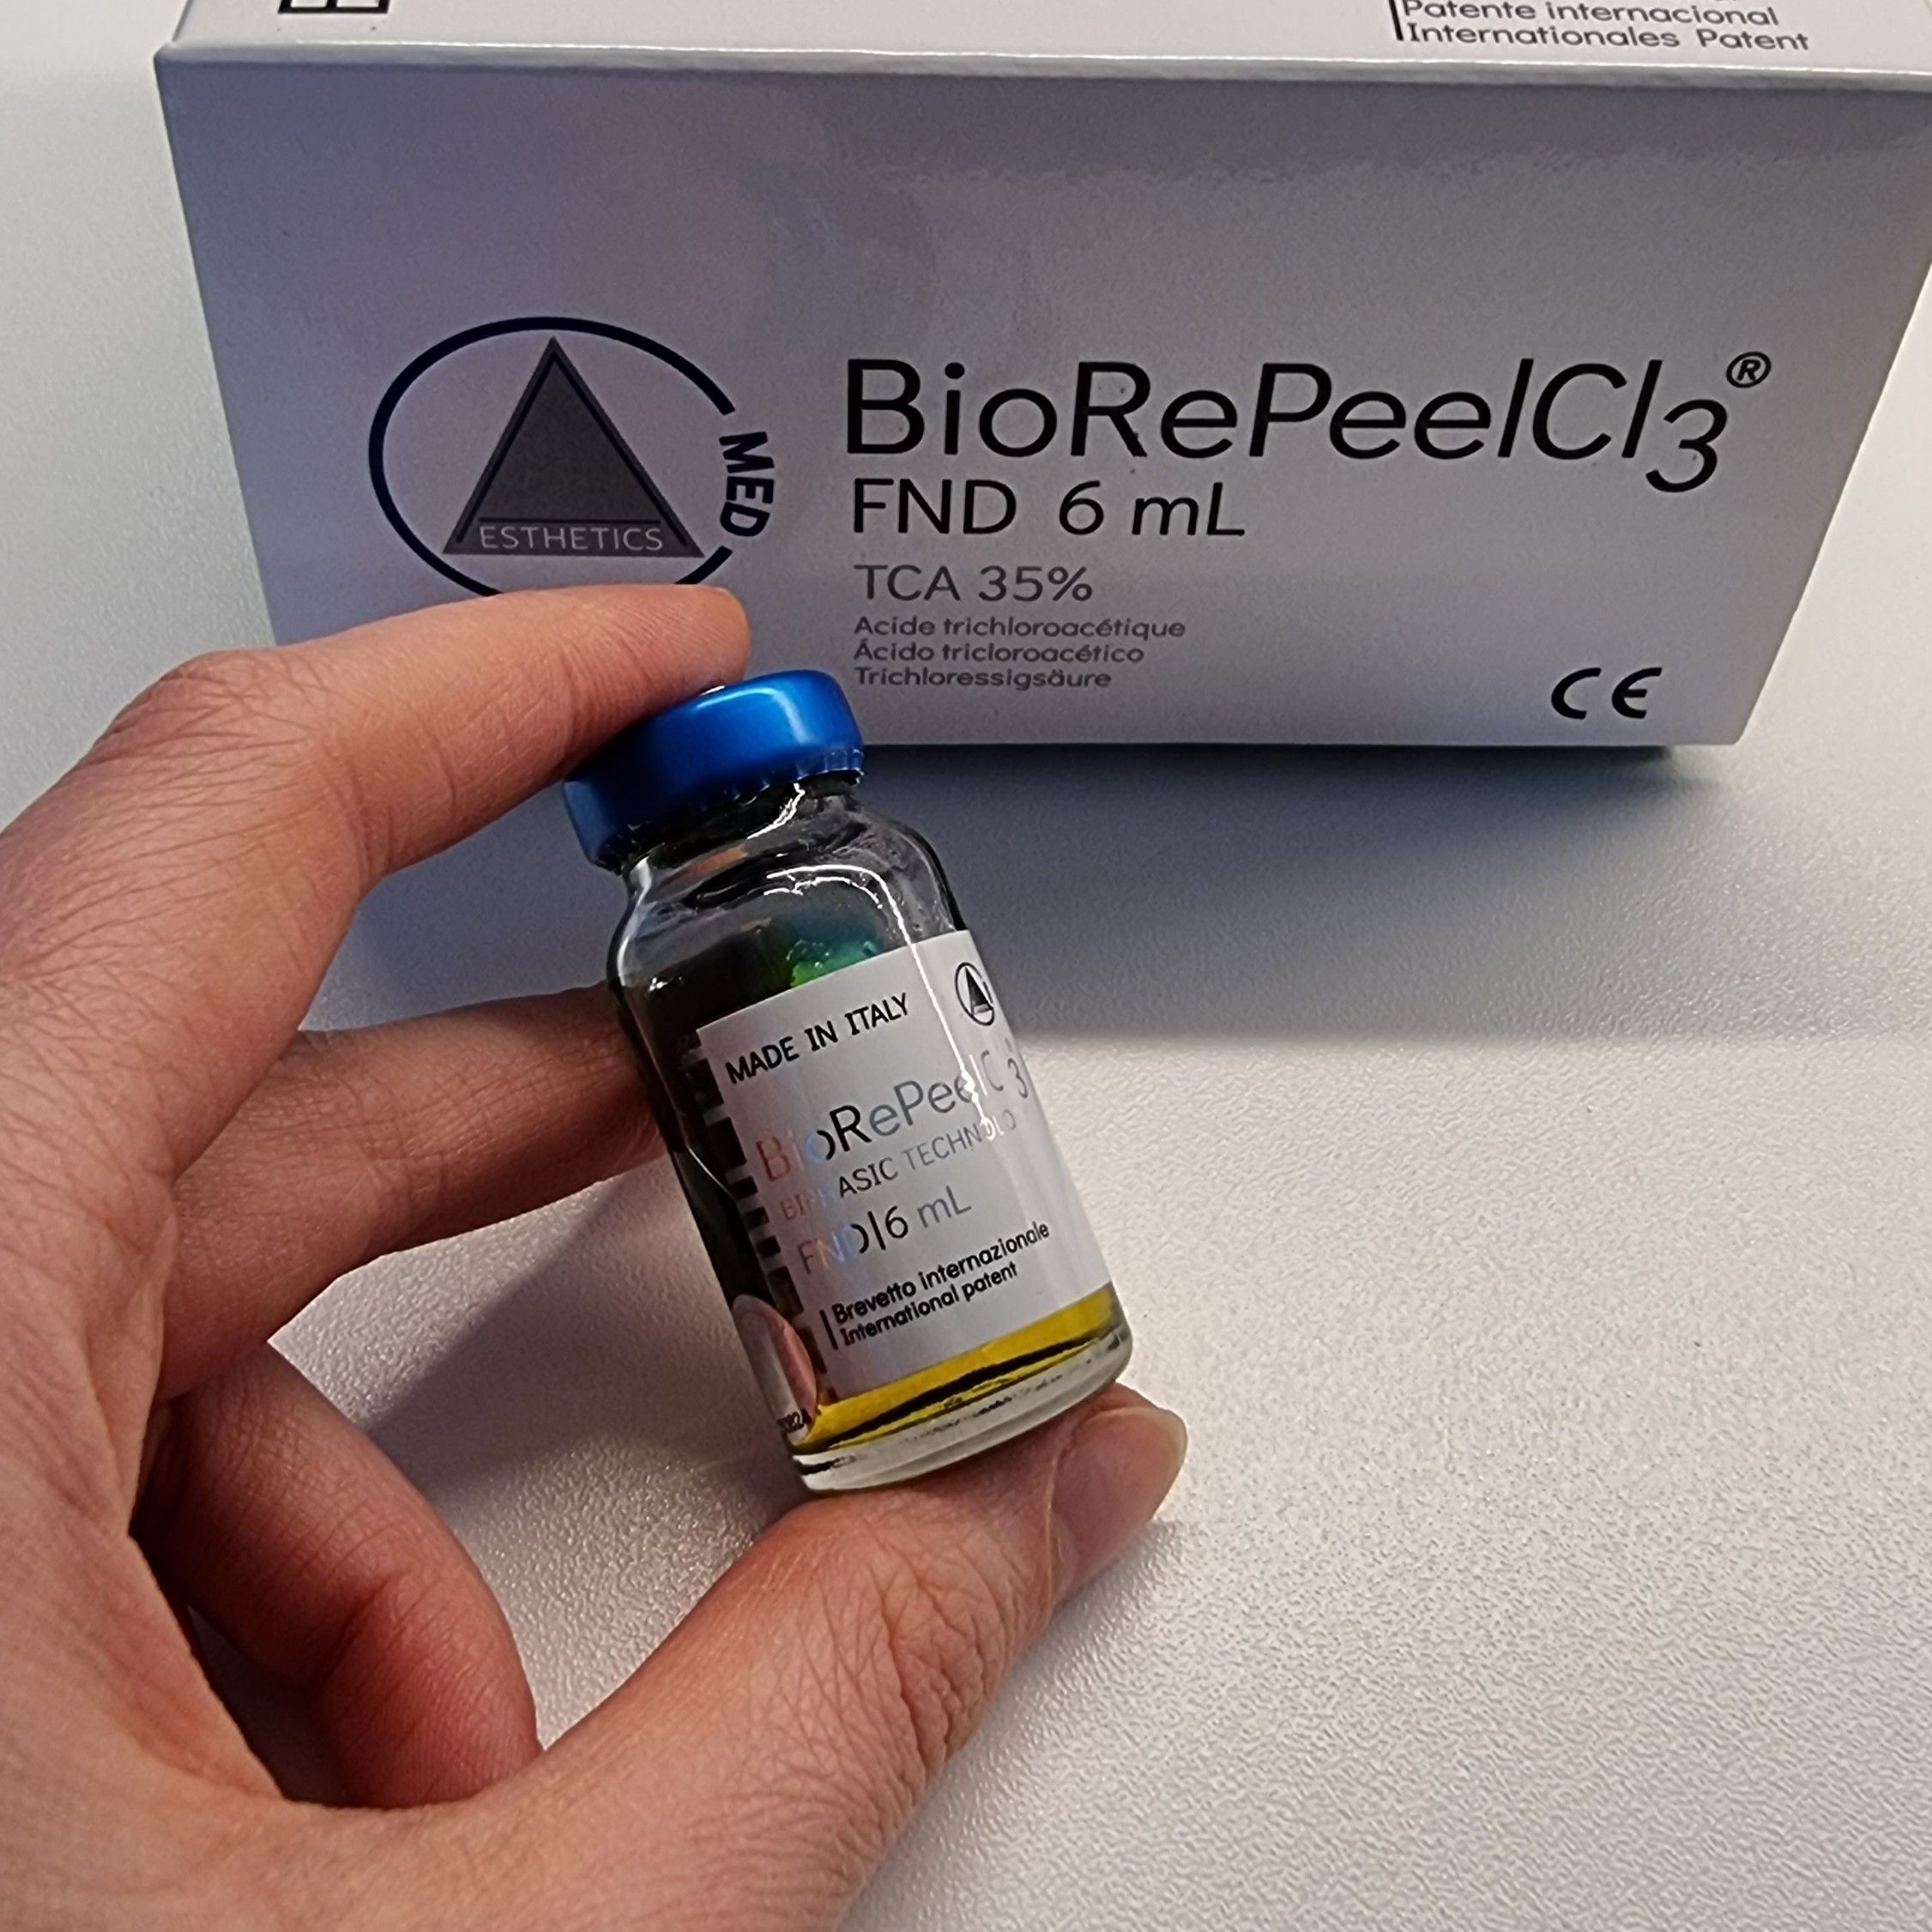 Portfolio usługi BioRePeelCl3